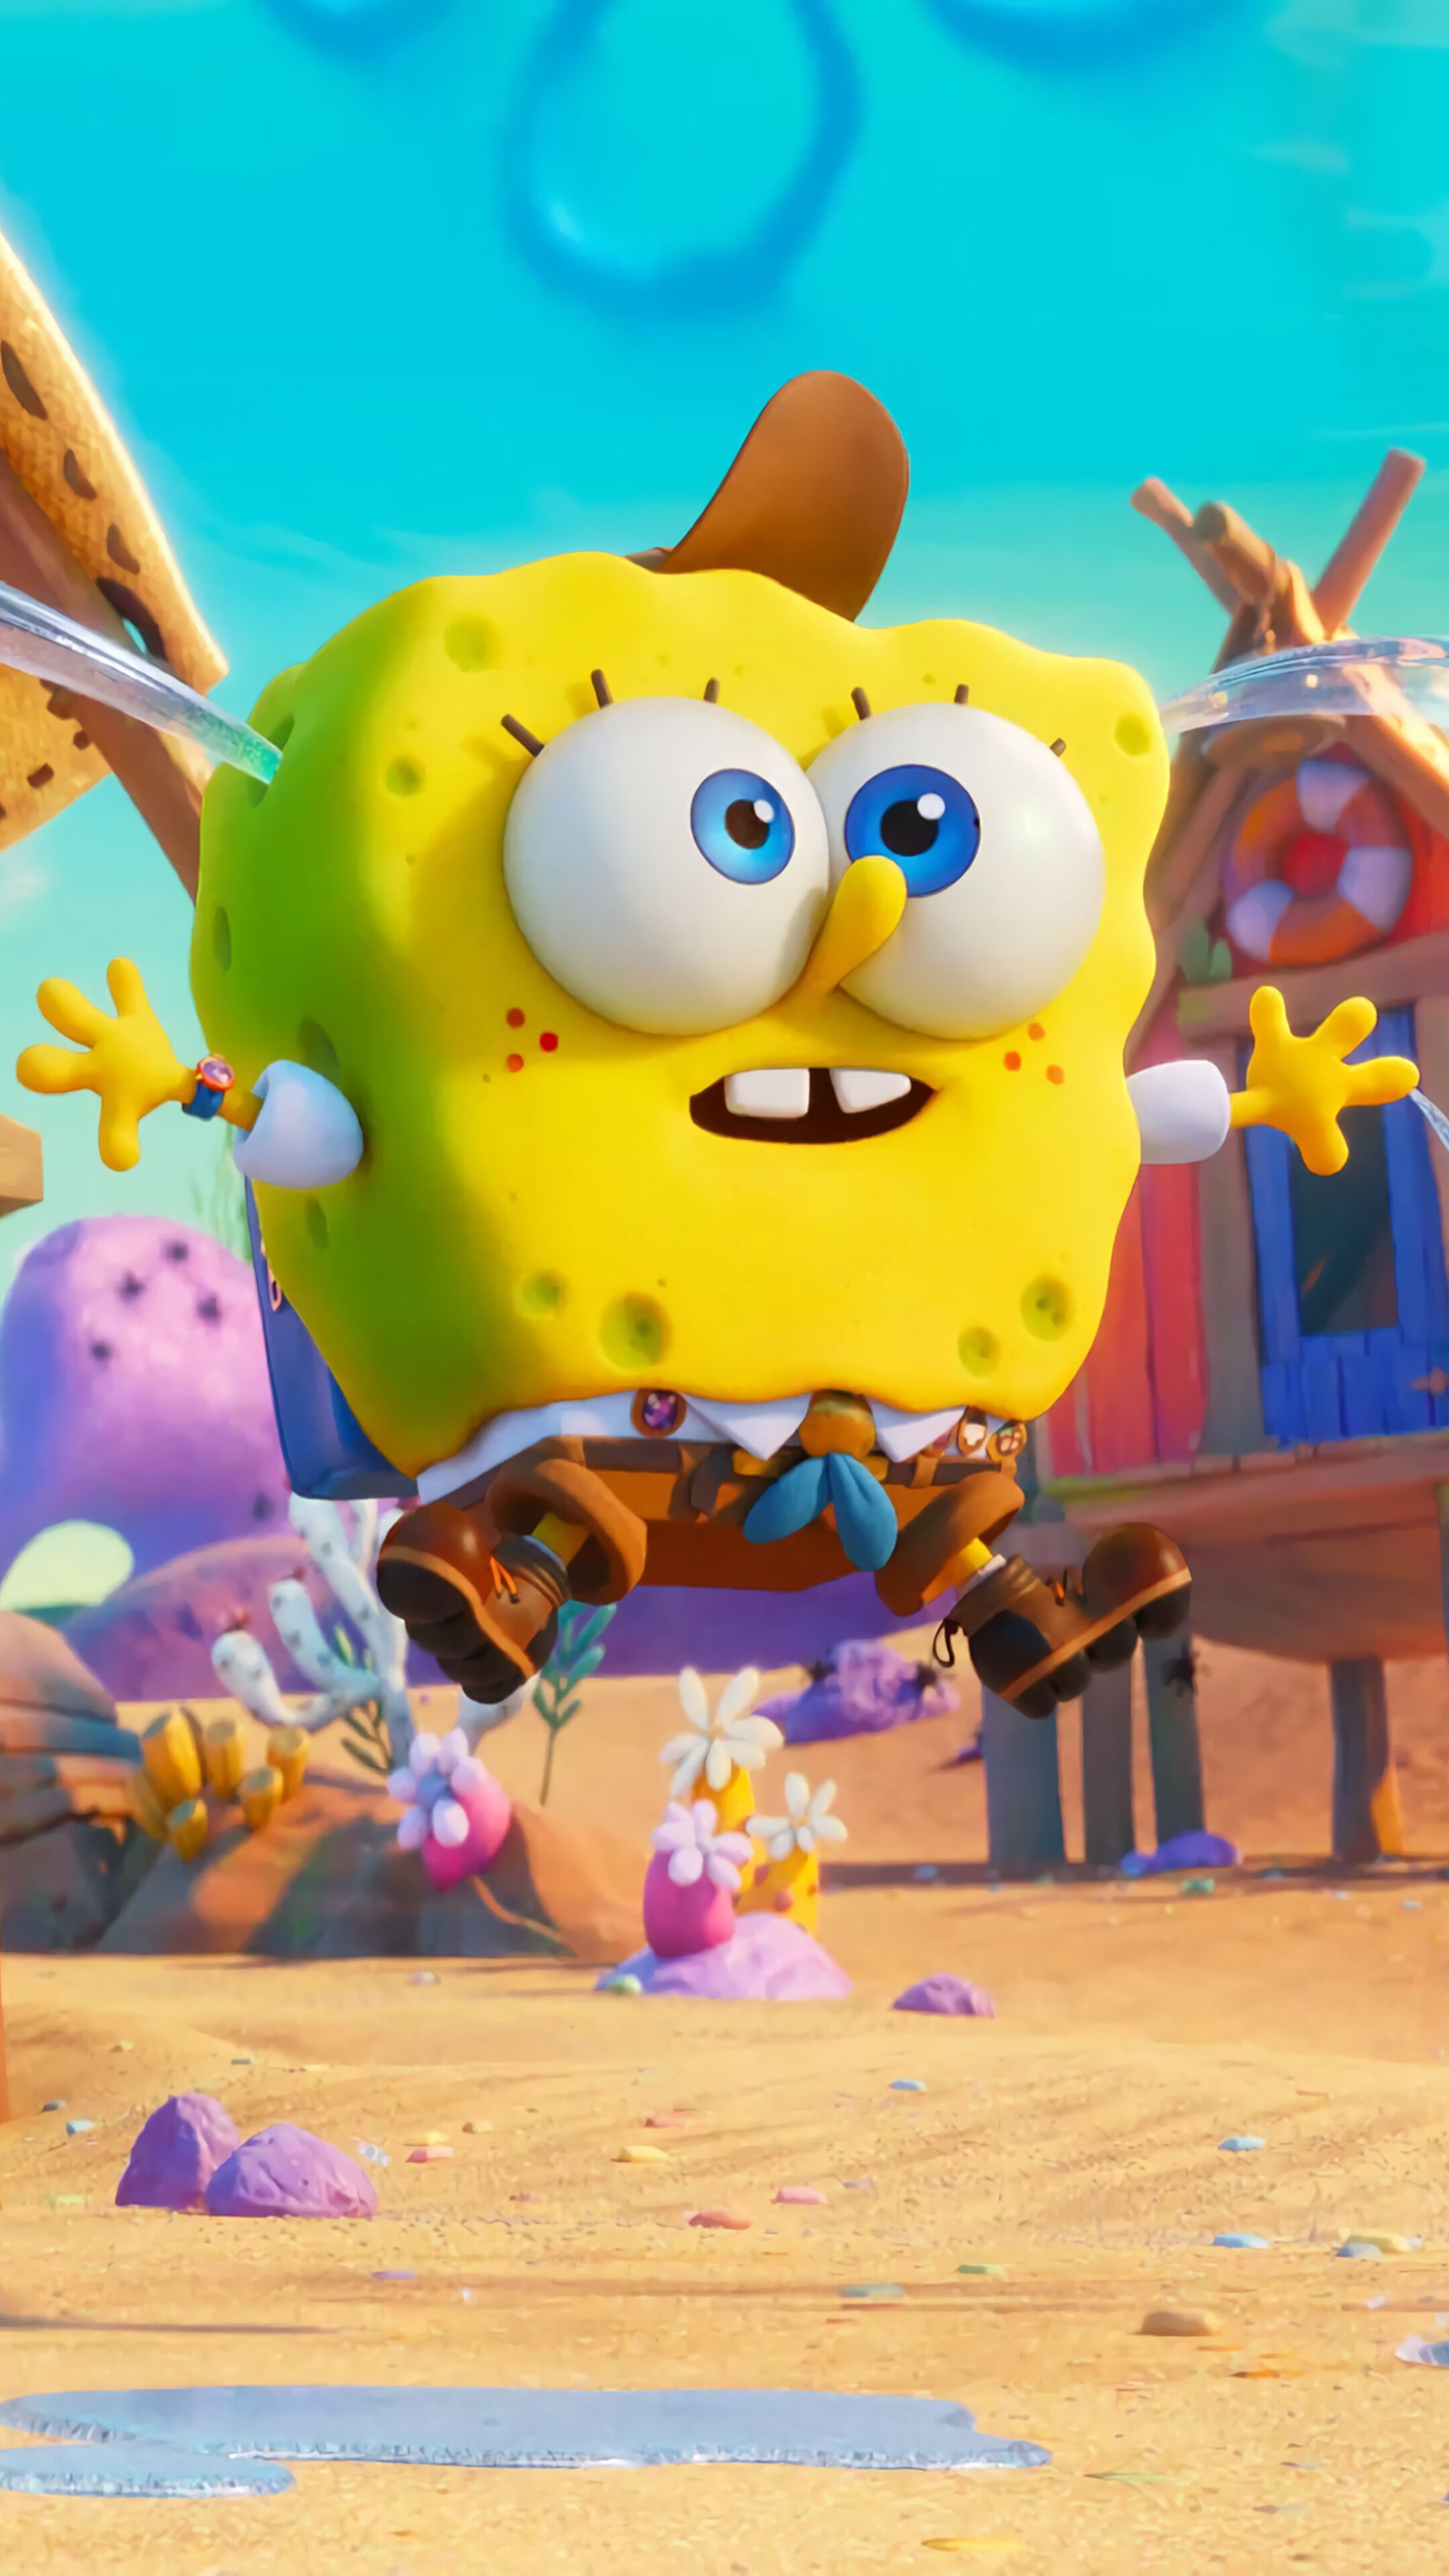 Kid, SpongeBob, The SpongeBob Movie Sponge on the Run, 4K phone HD Wallpaper, Image, Background, Photo and Picture